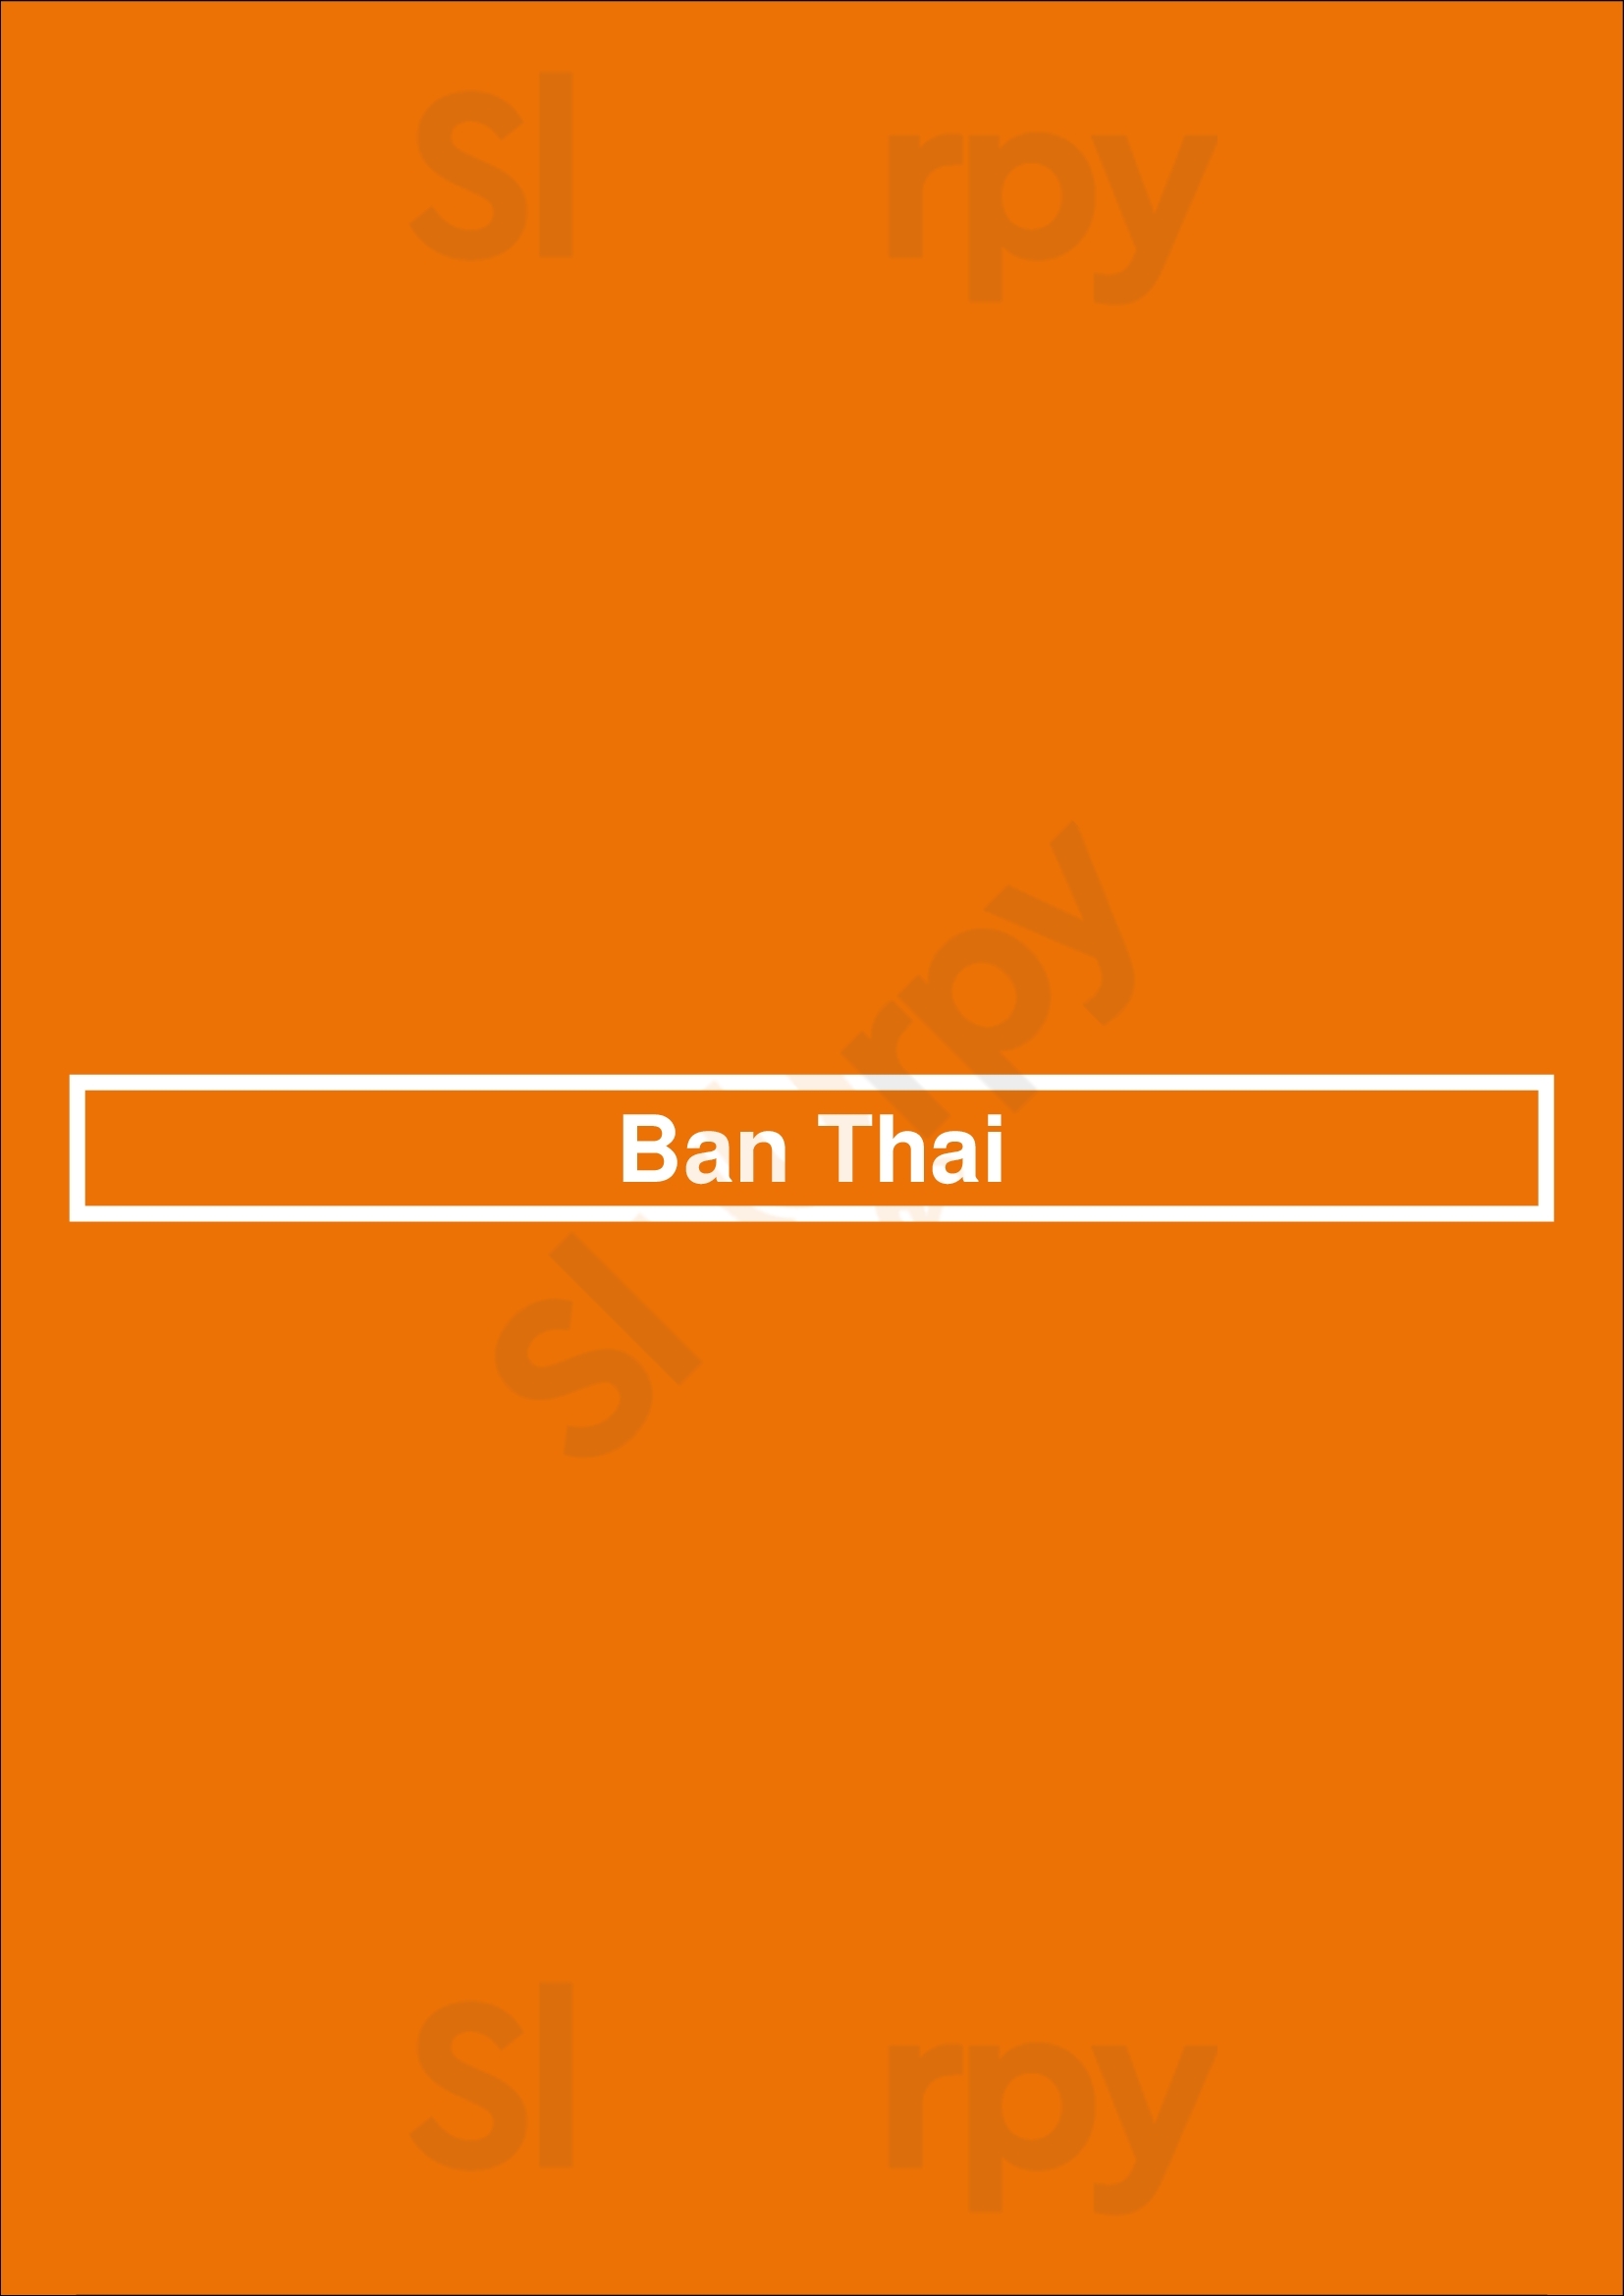 Ban Thai Edmonton Menu - 1